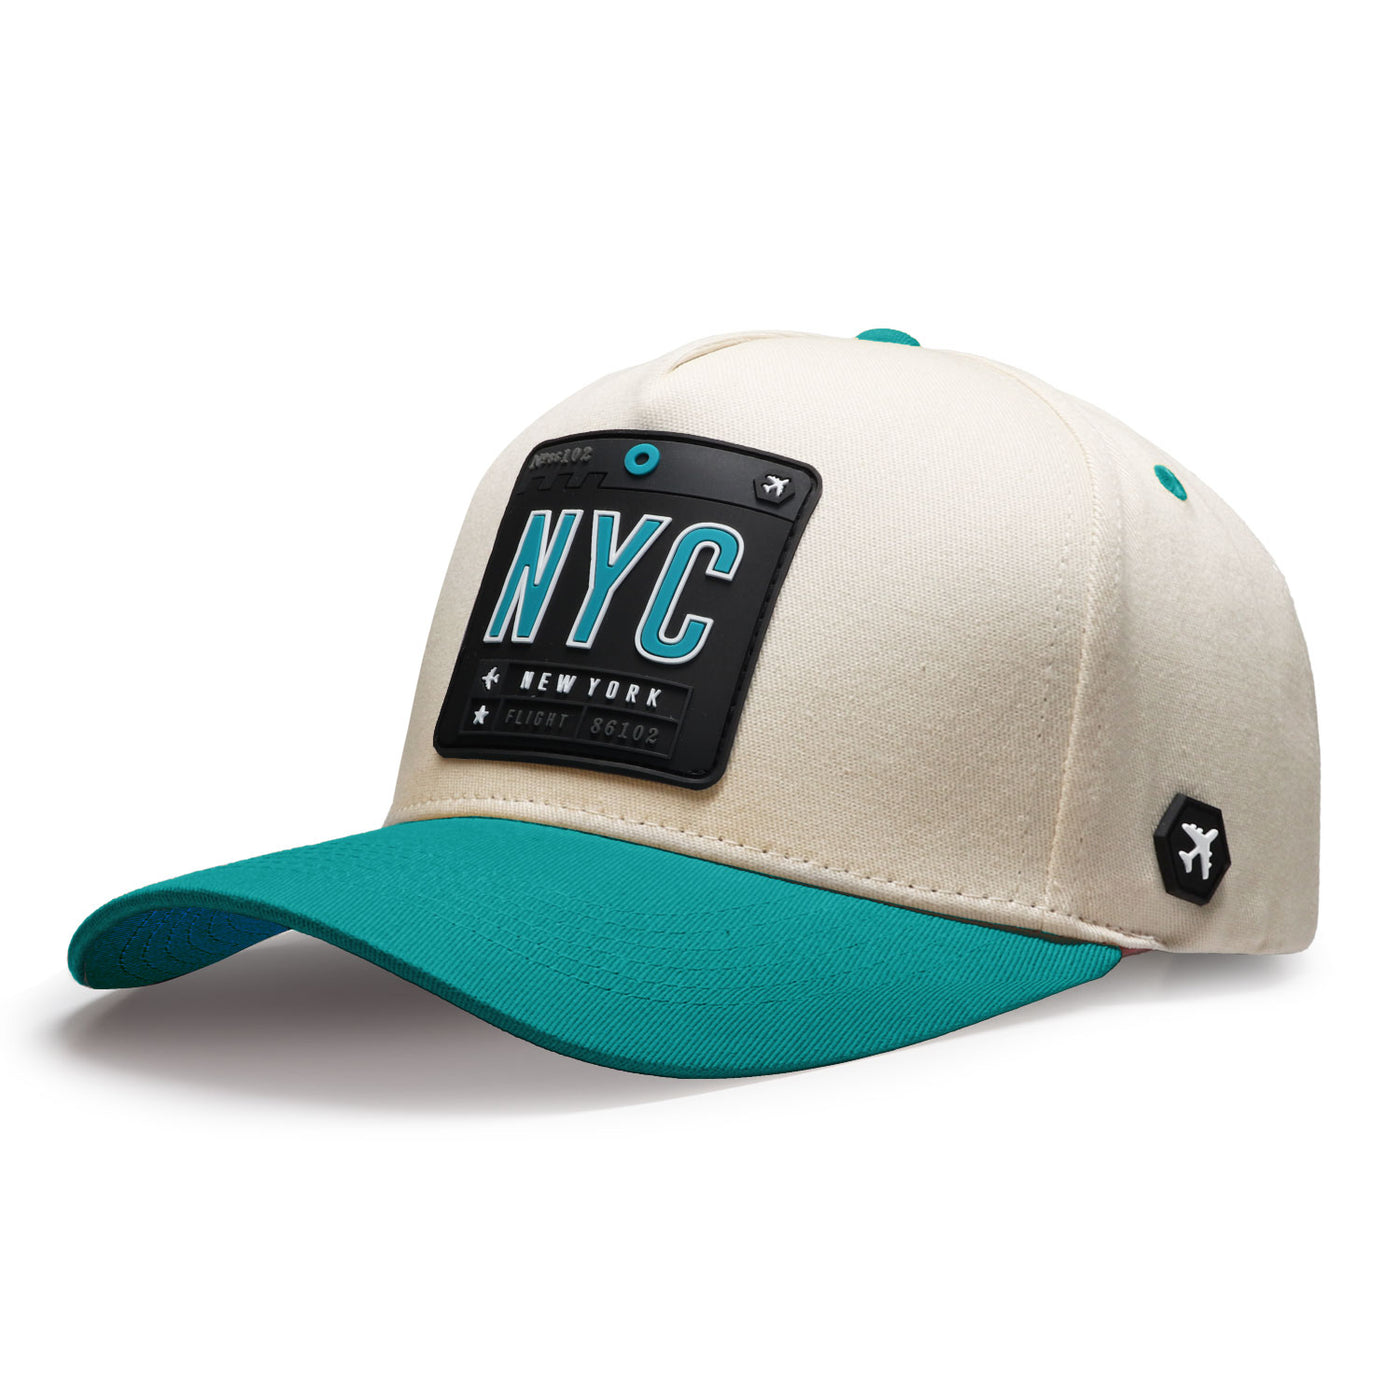 New York Classic Cap - Natural/Teal